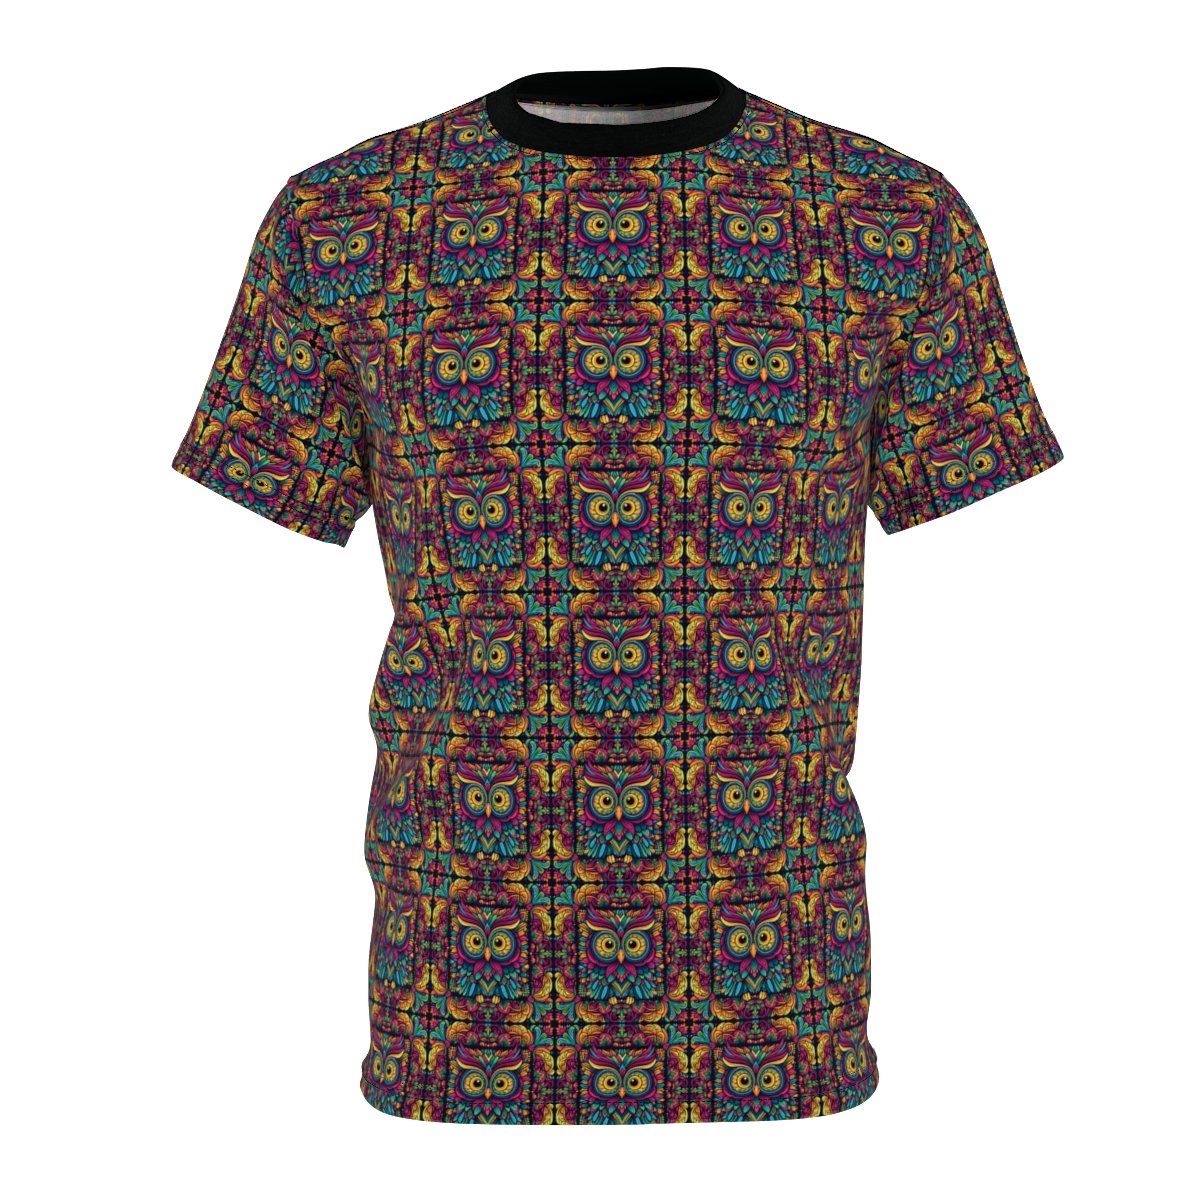 Owl Mandala - Small Print - Multi Colors - Unisex Tee - T-Shirt